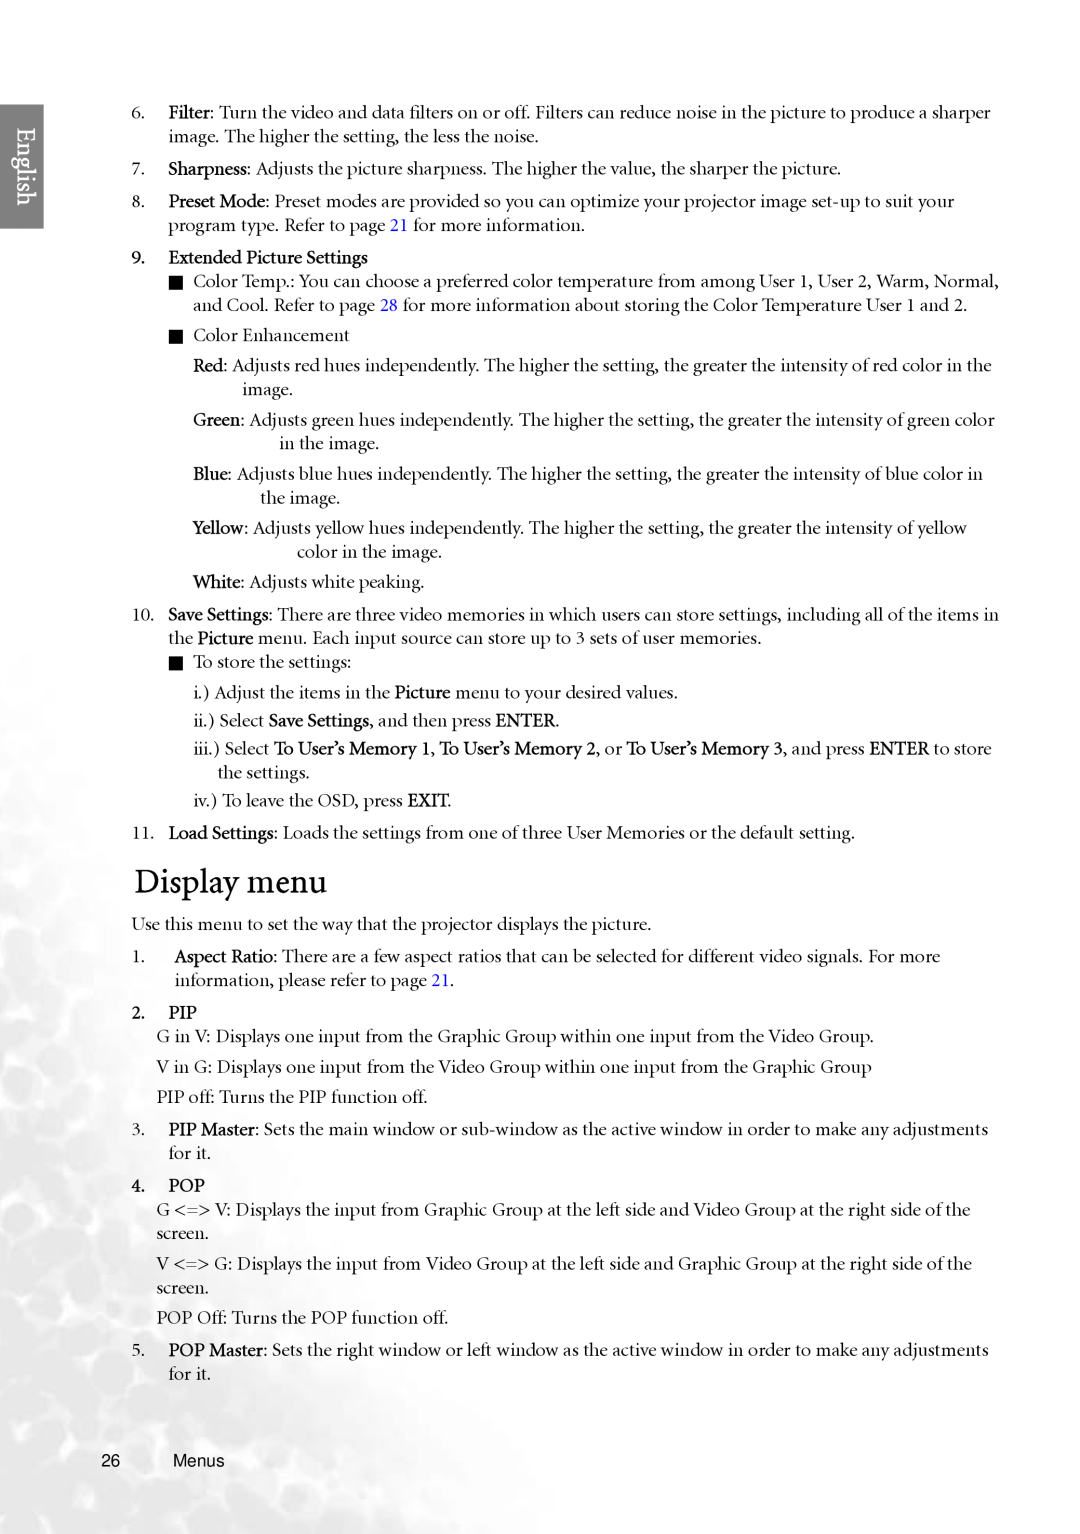 BenQ PE7700 user manual Display menu, English, Extended Picture Settings, Pip, Pop 